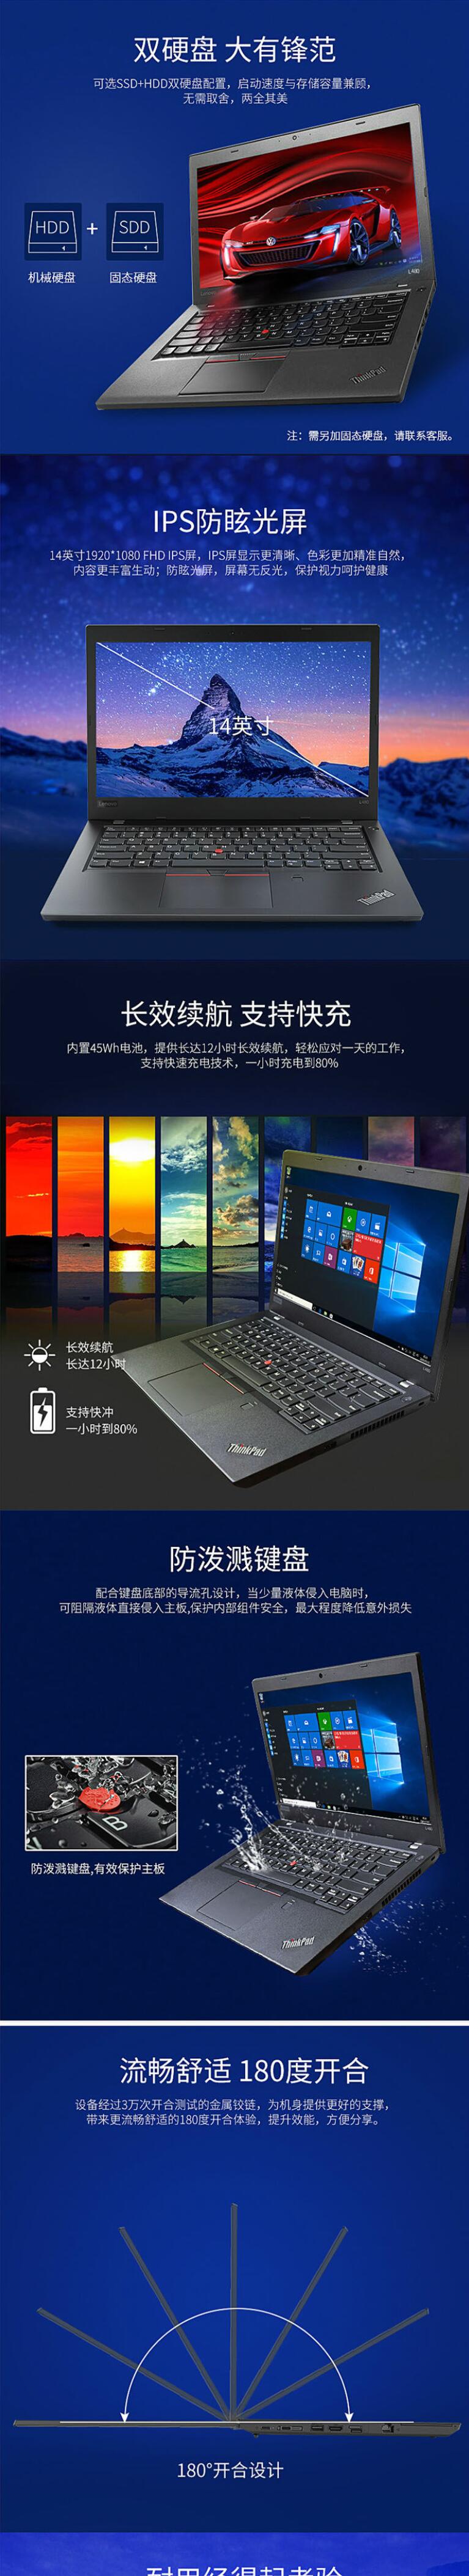 联想/Lenovo ThinkPad L480 14英寸笔记本电脑（i7-8250U/4G/1T/2G独显）       (图5)